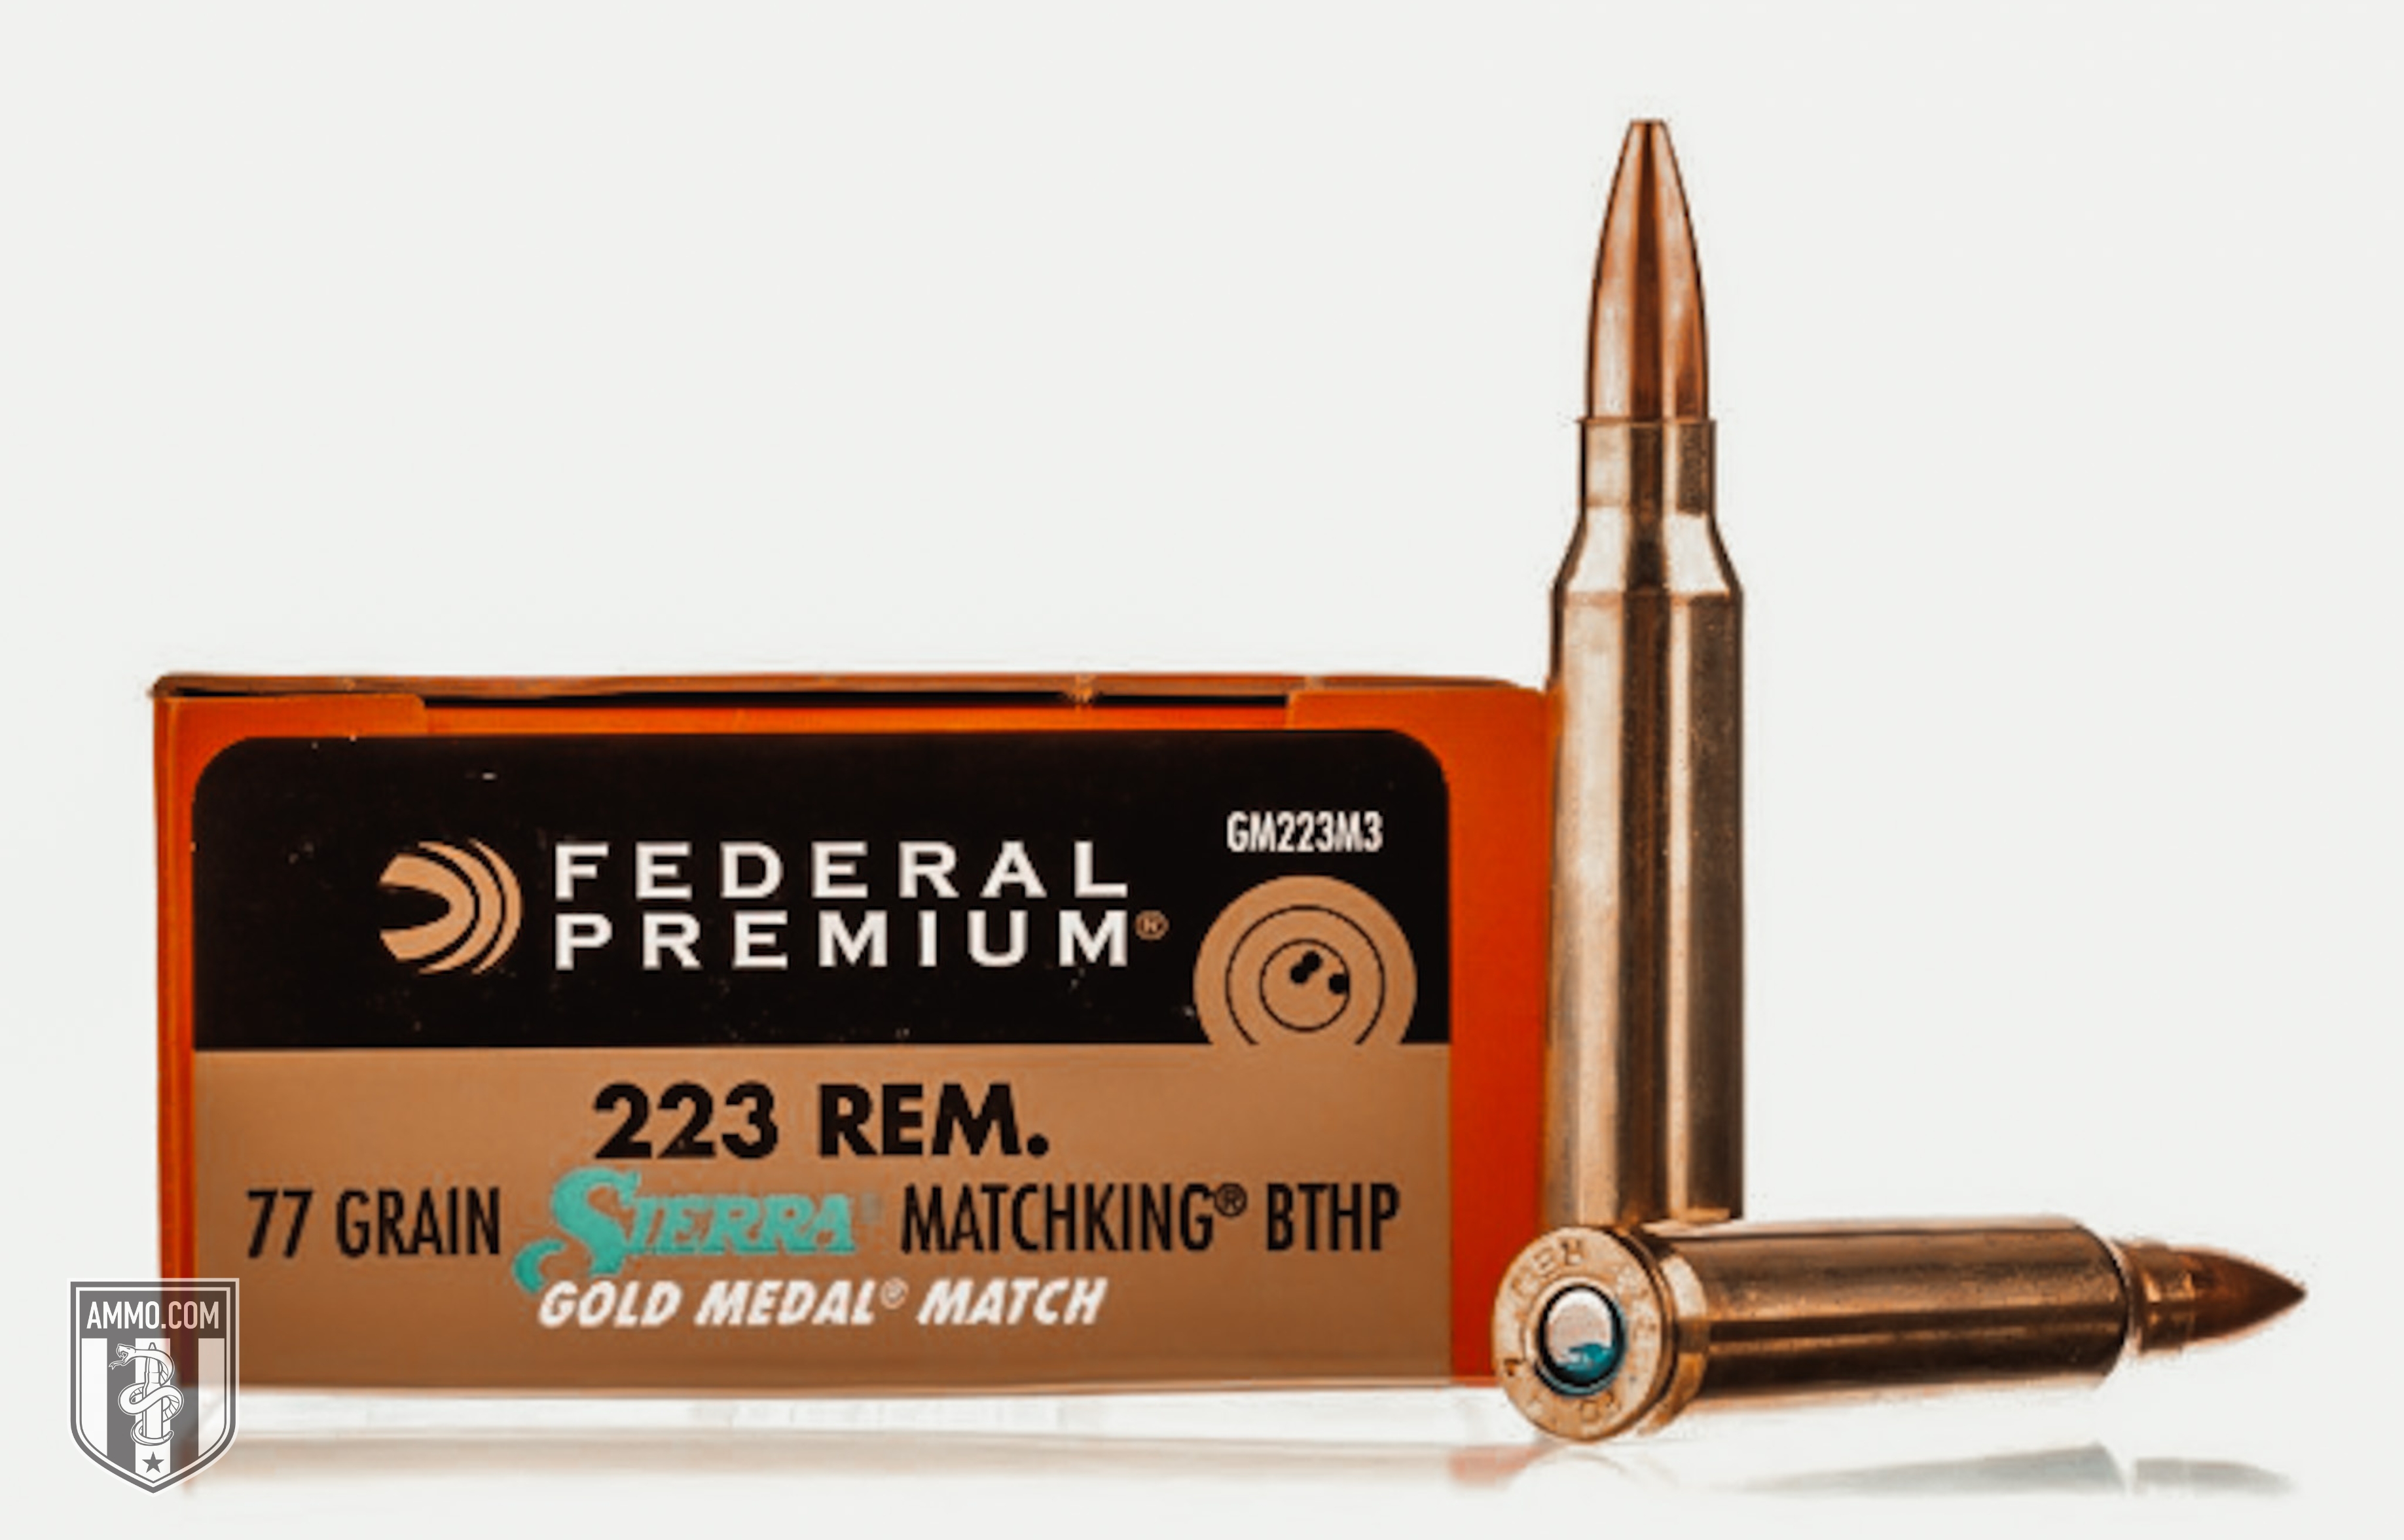 Federal Premium 223 Rem HPBT ammo for sale